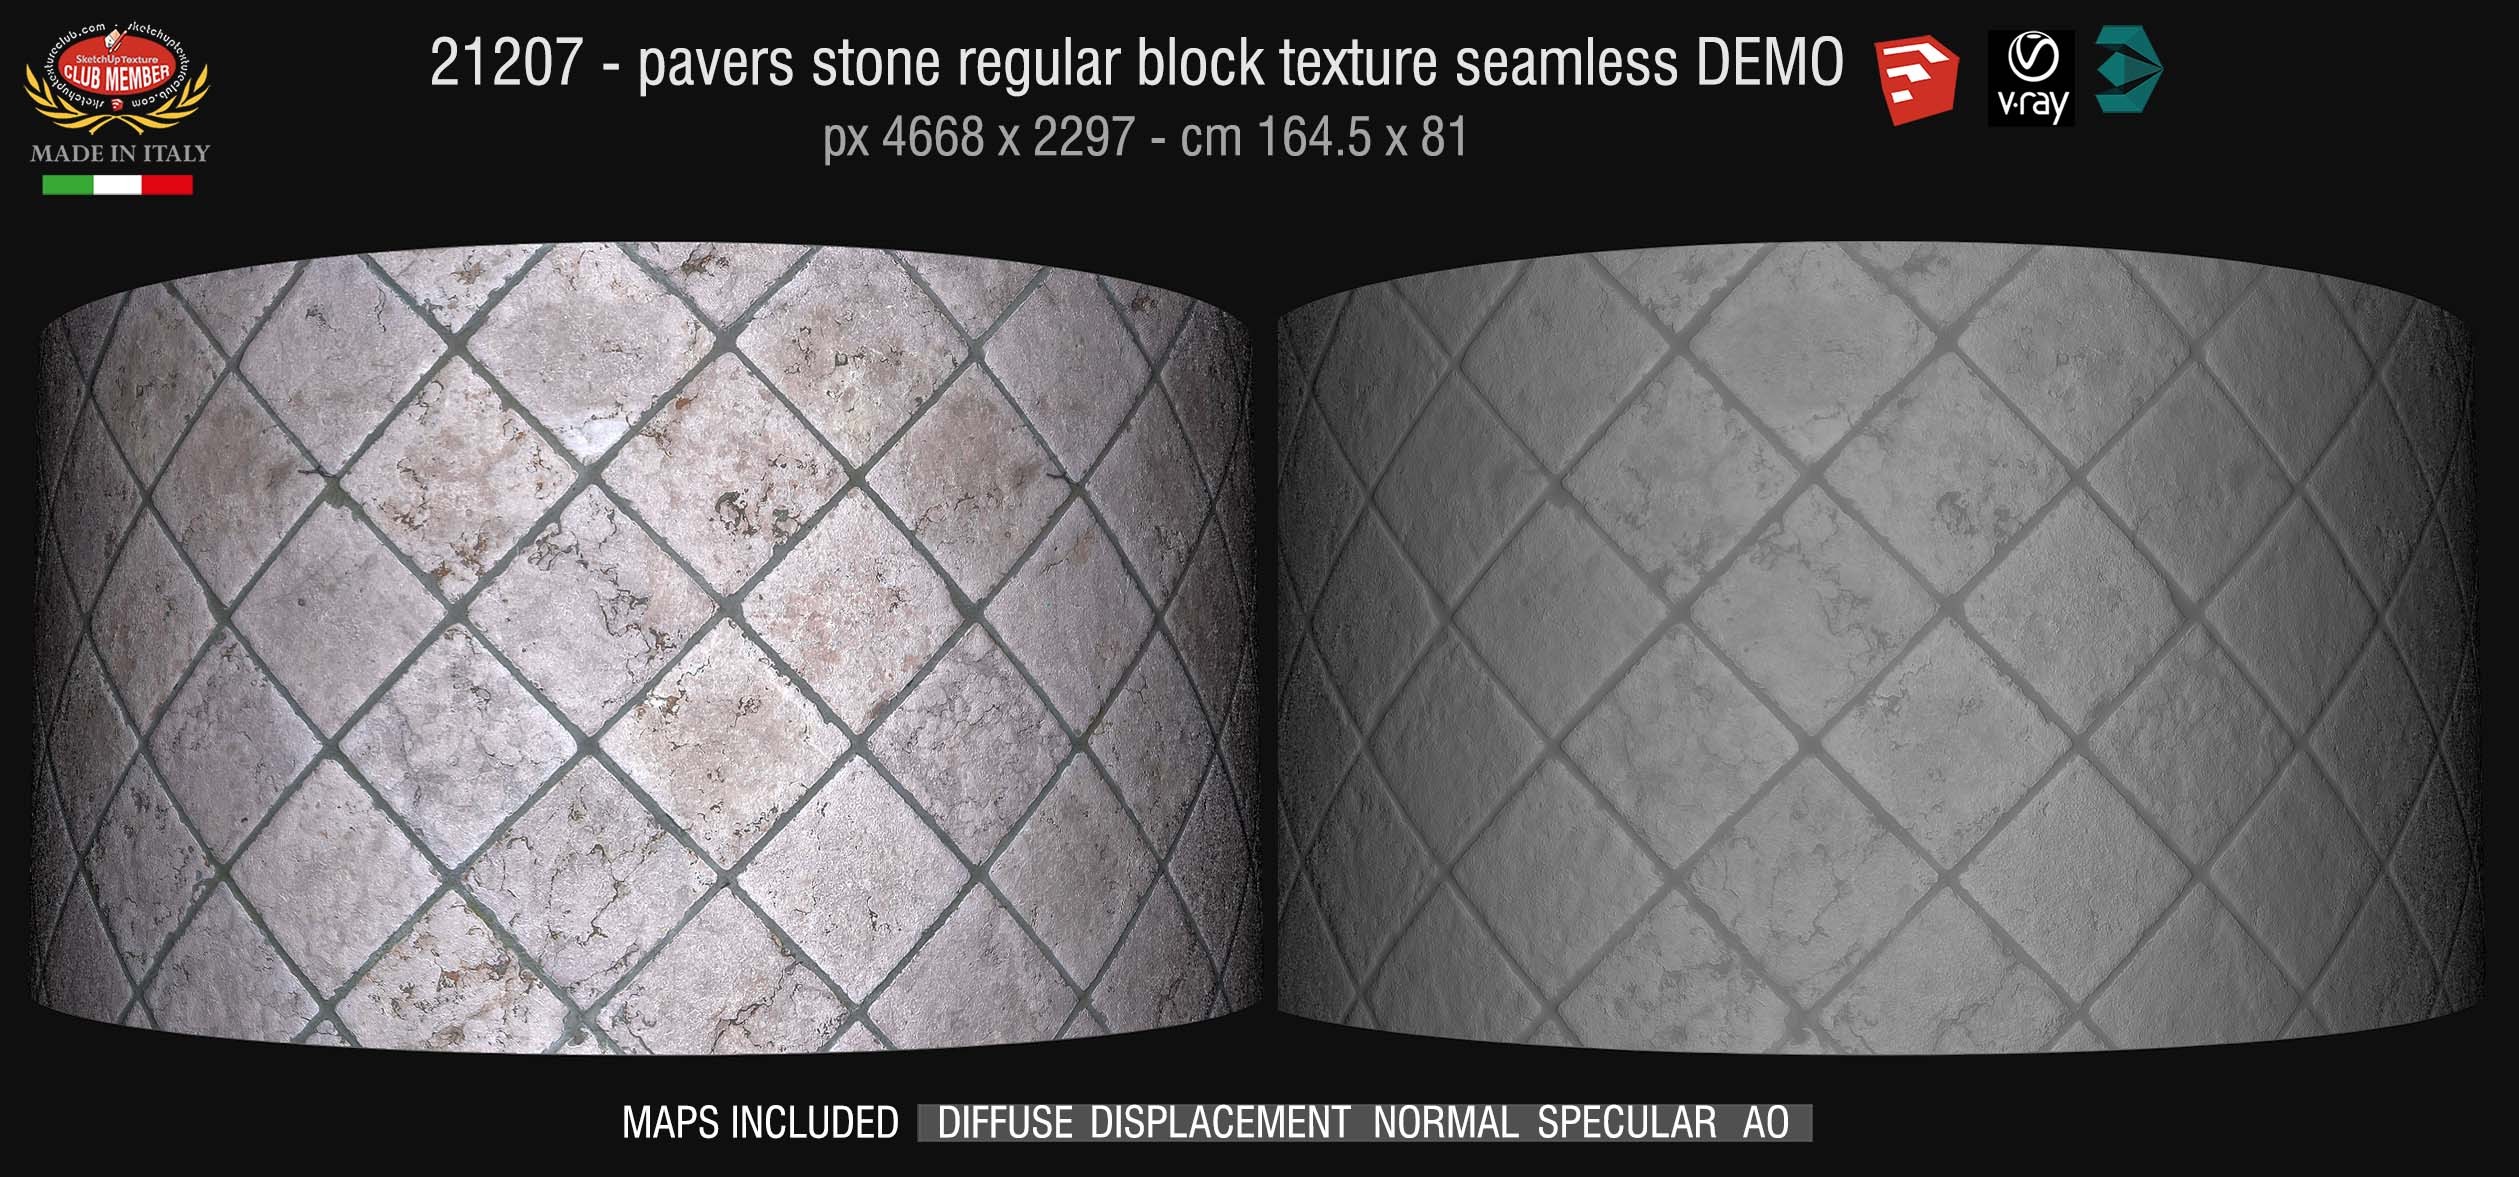 21207 HR Pavers stone regular block texture + maps DEMO